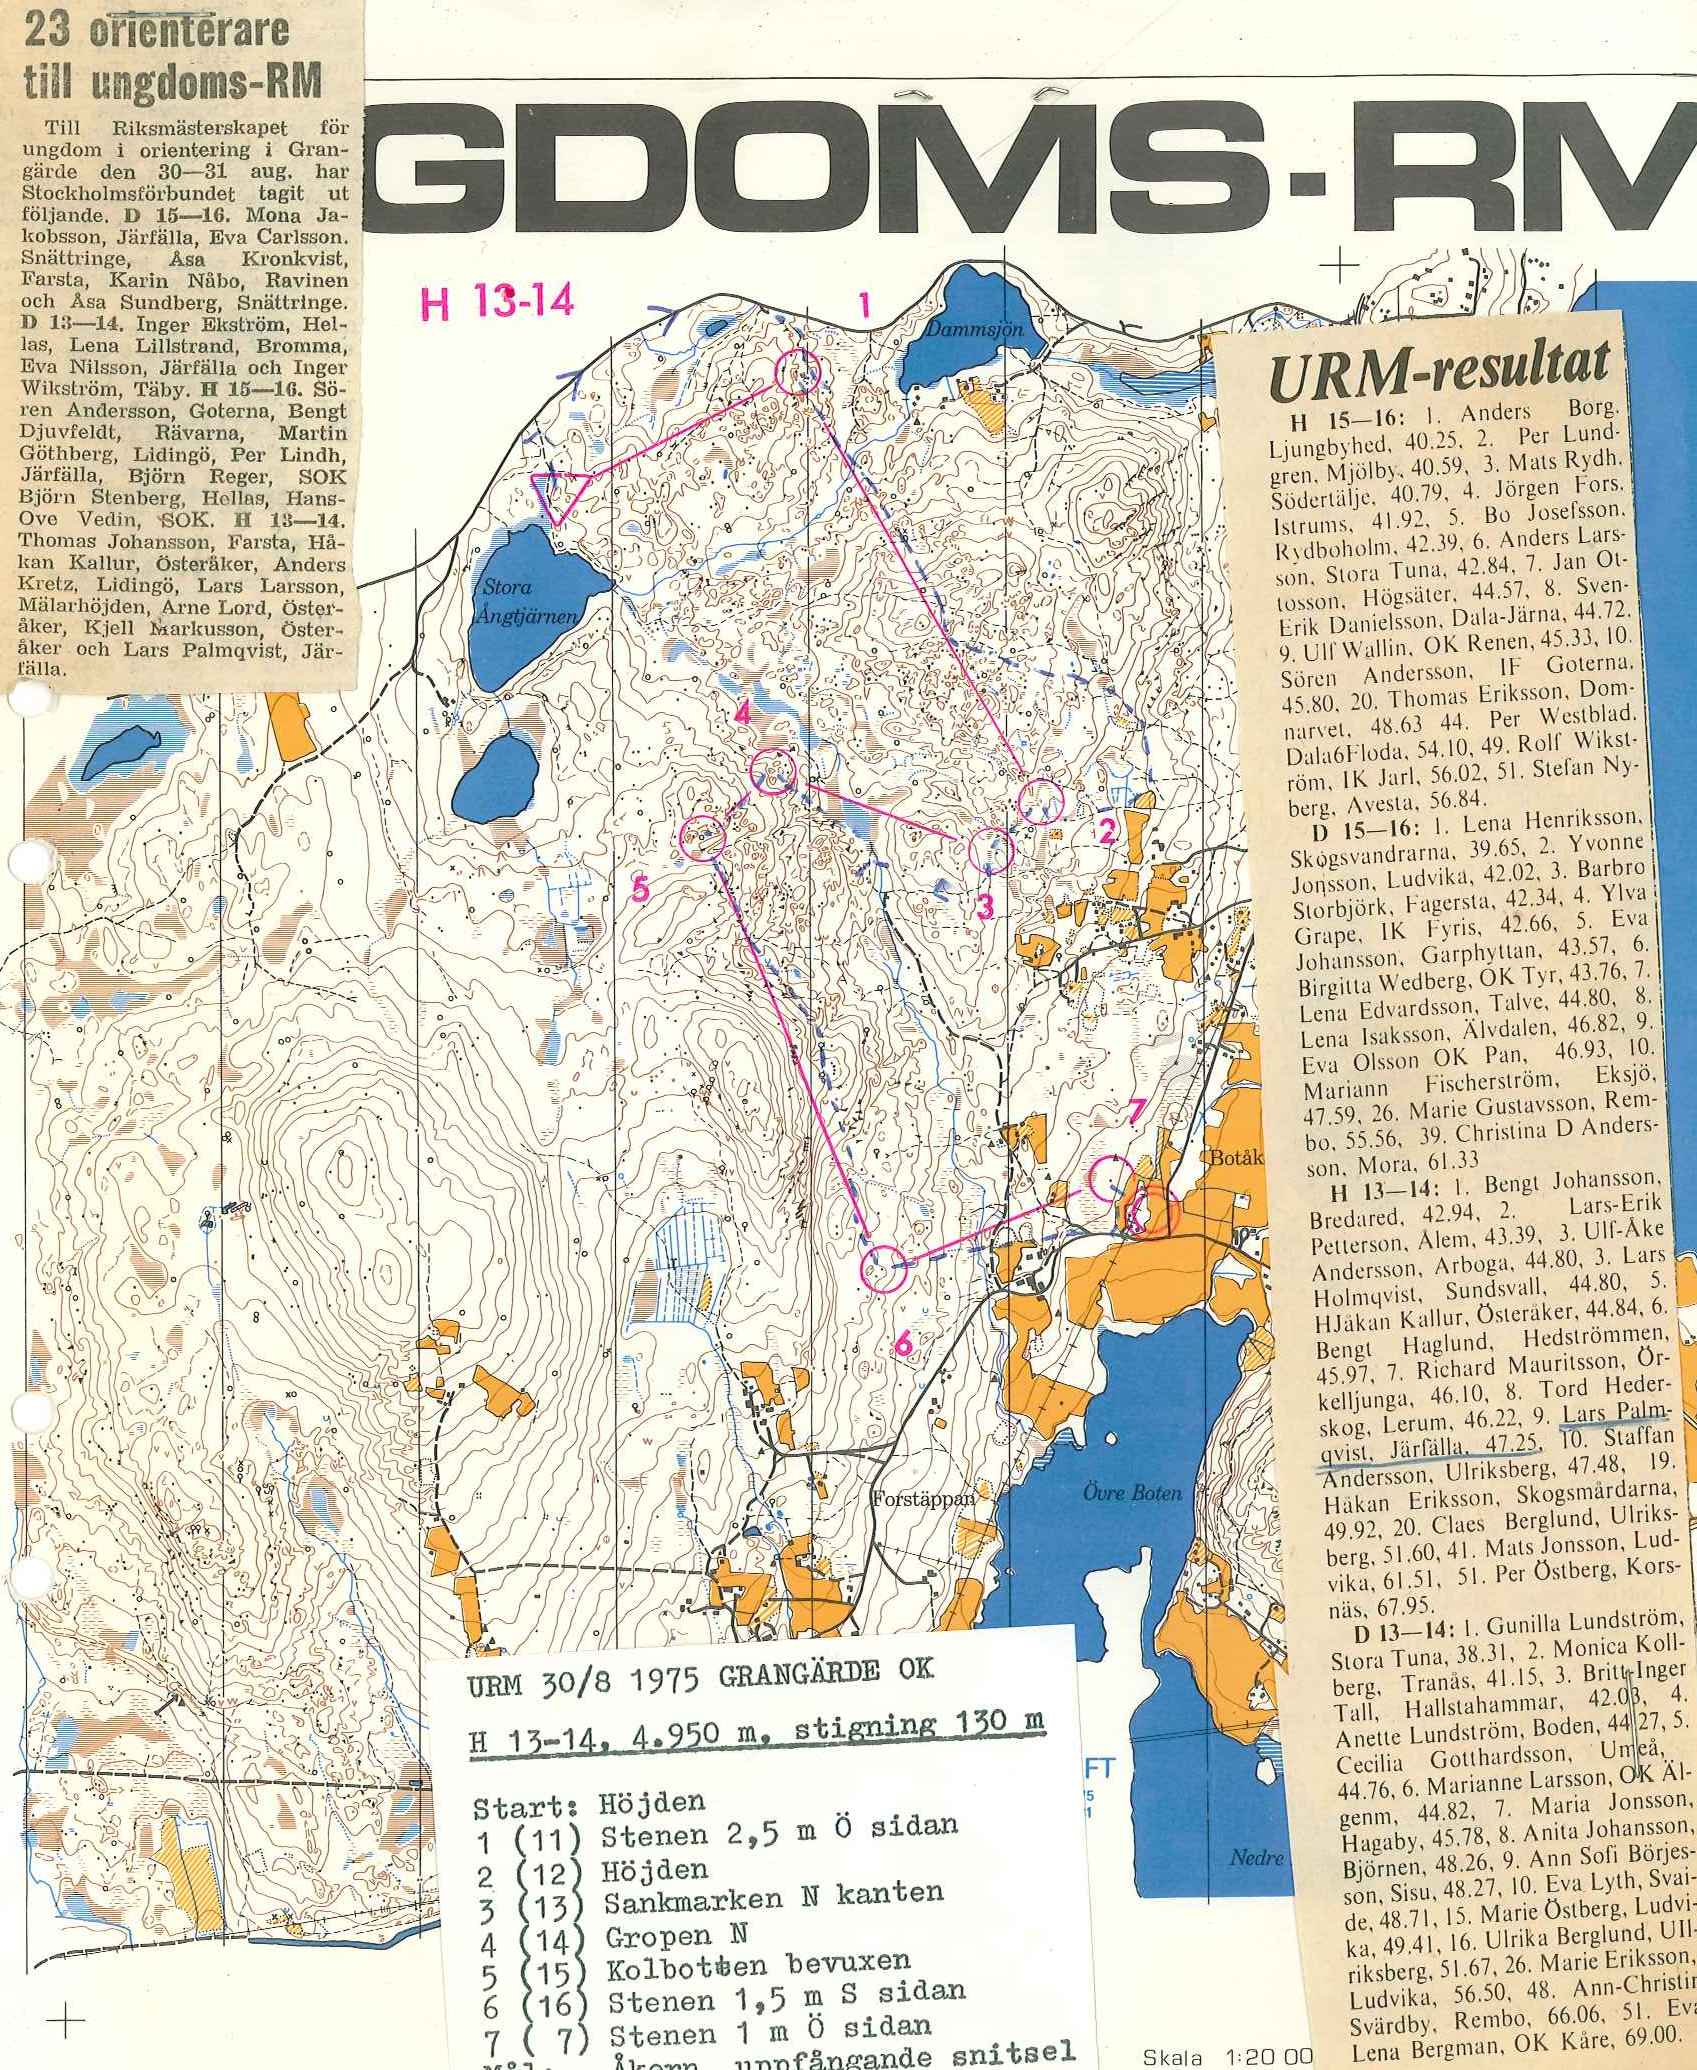 USM (1975-08-30)